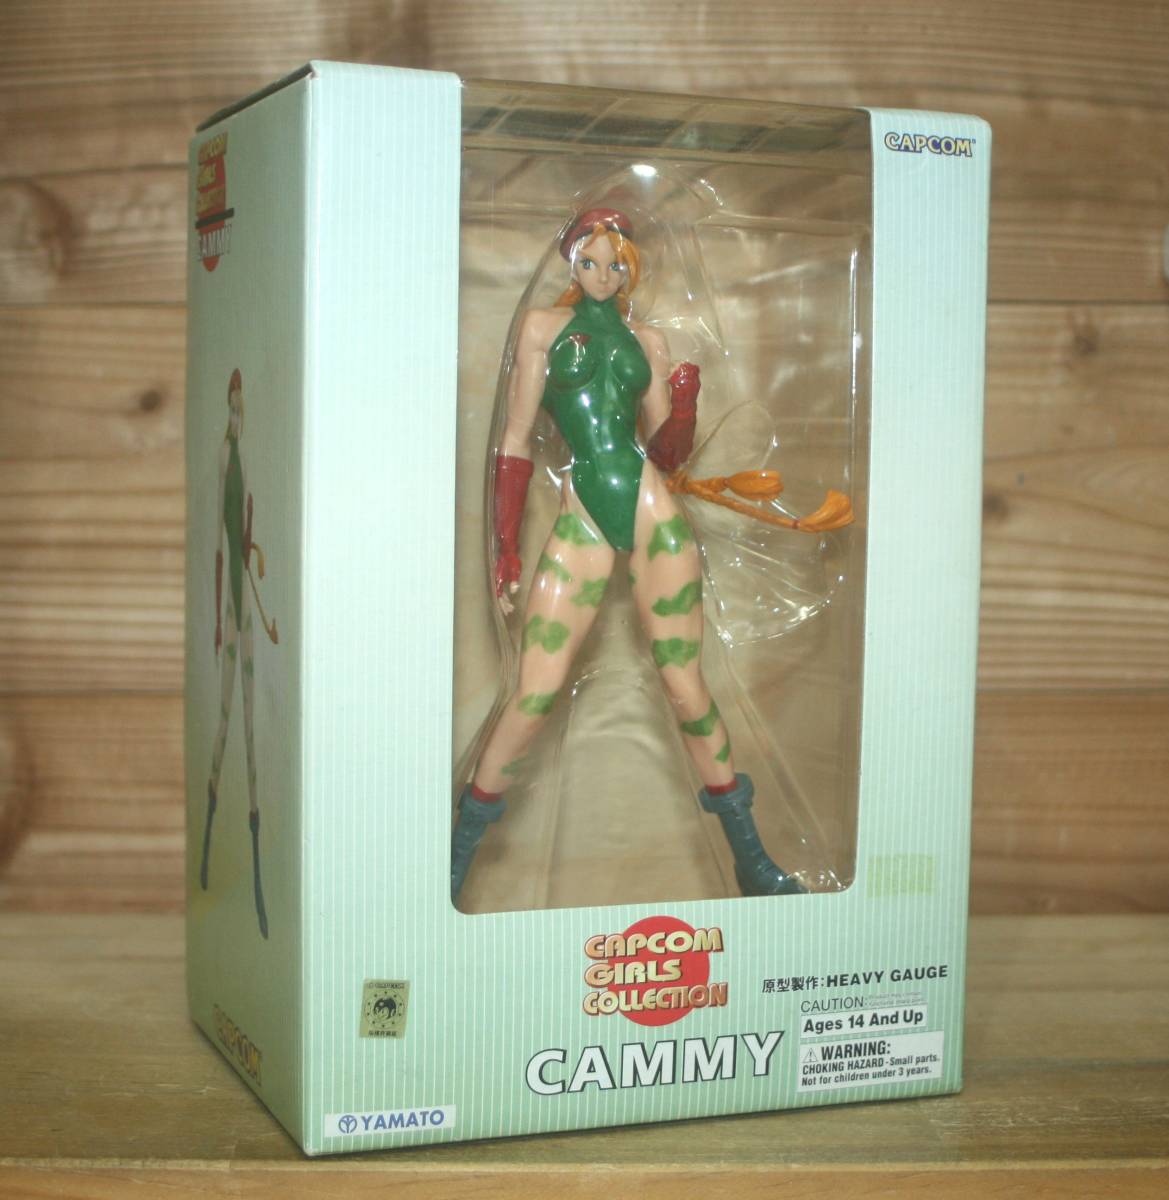  new goods * Capcom Girls Collection CAMMY Cami (..., spring saec Sakura, spring beauty, rose, Rainbow *mika, wing lid, god month Karin )